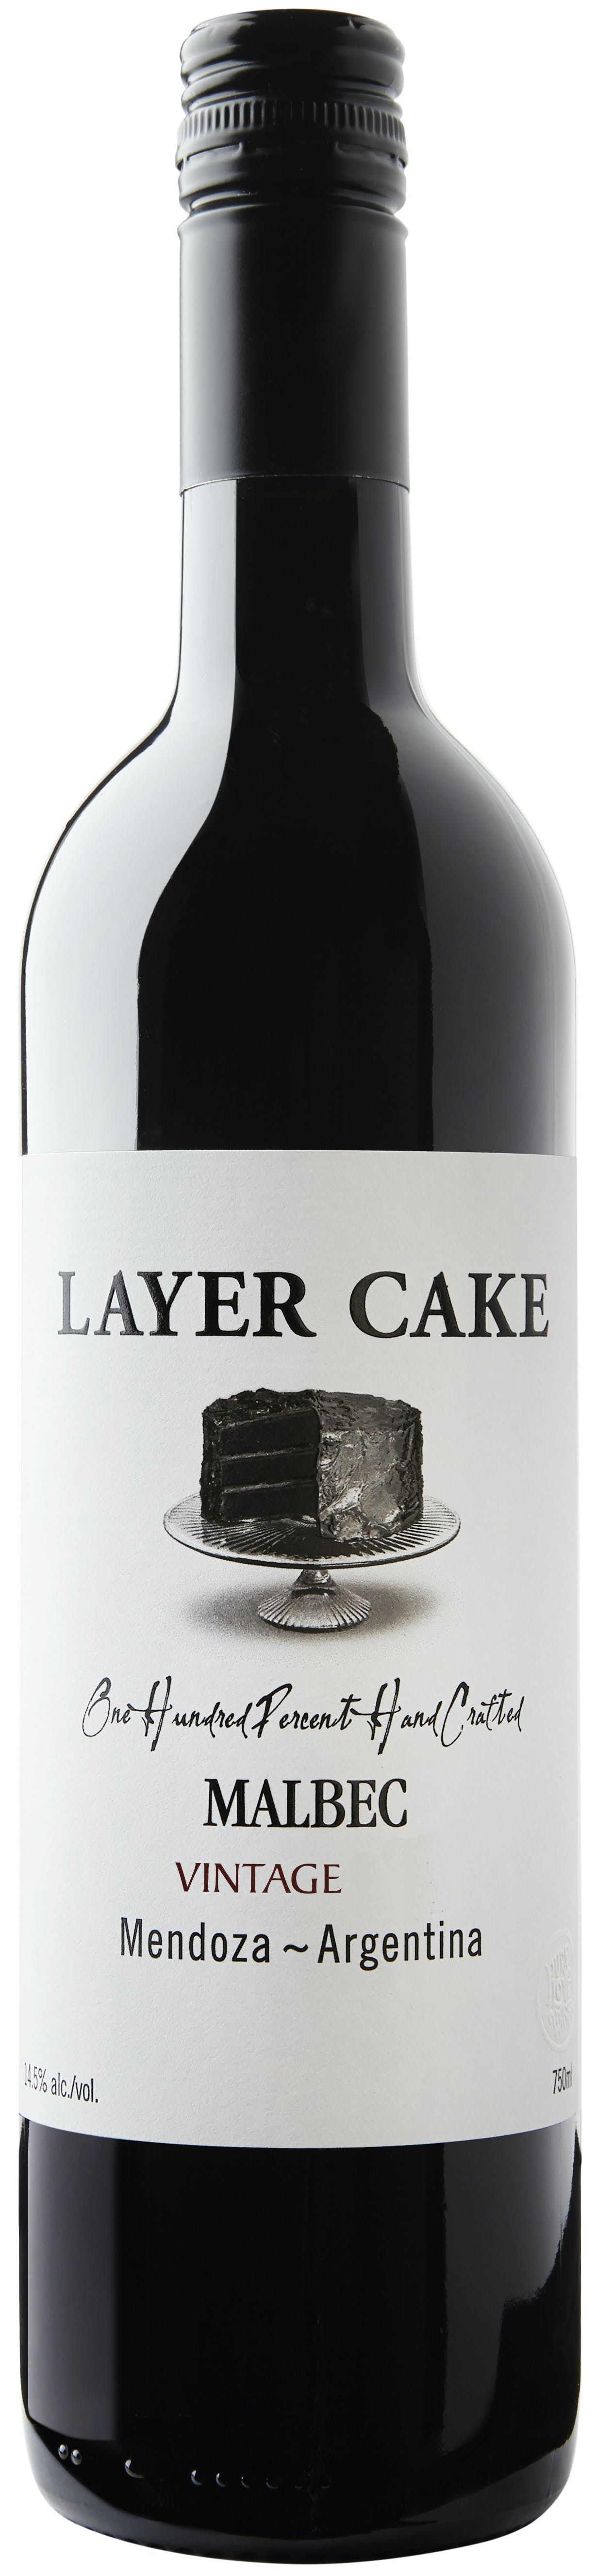 images/wine/Red Wine/Layer Cake Malbec.jpg